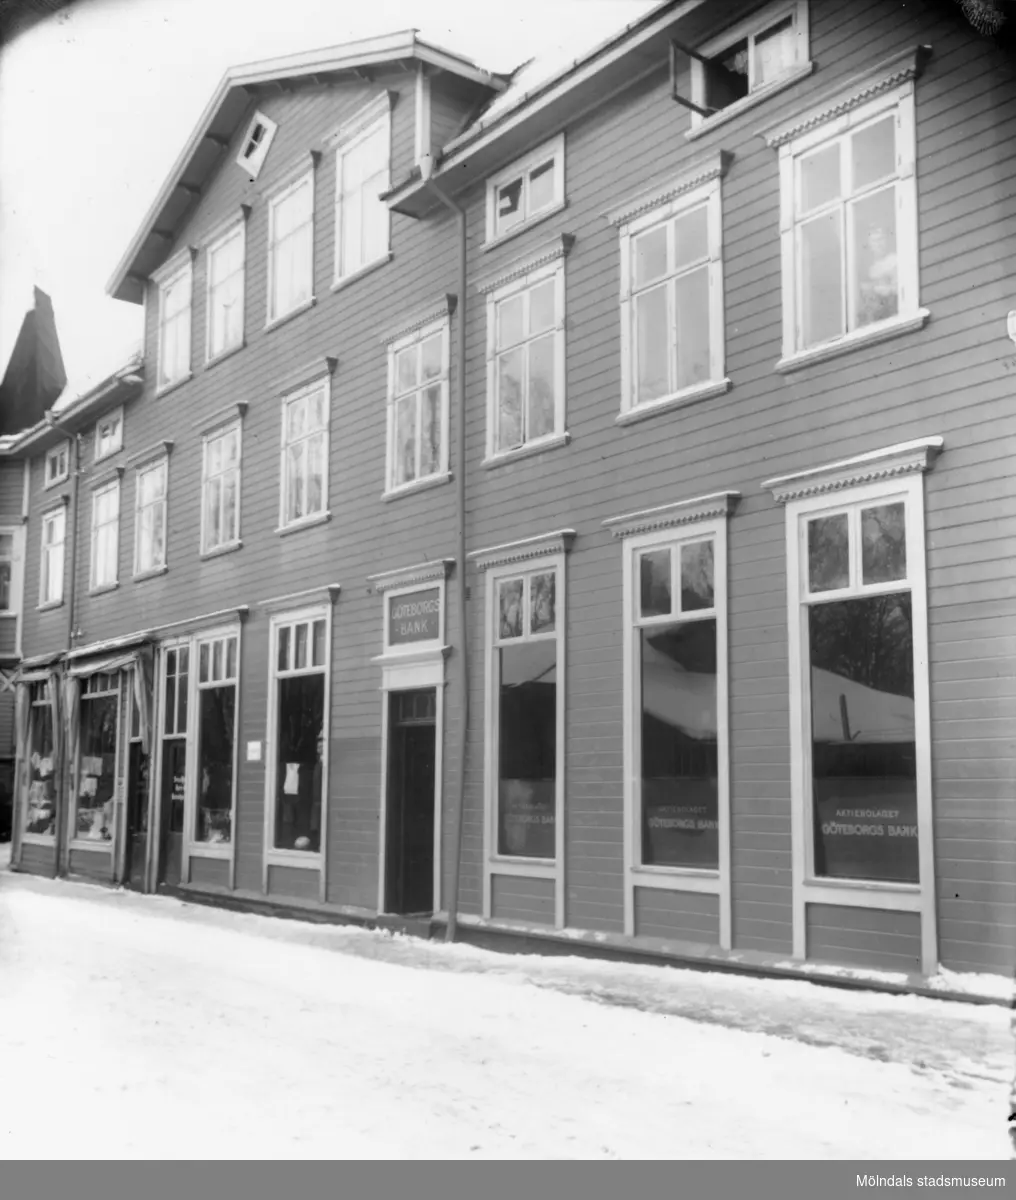 Göteborgs bank på Kvarnbygatan 25, år 1928. Fotot togs då banken var inrymd i byggnaden.